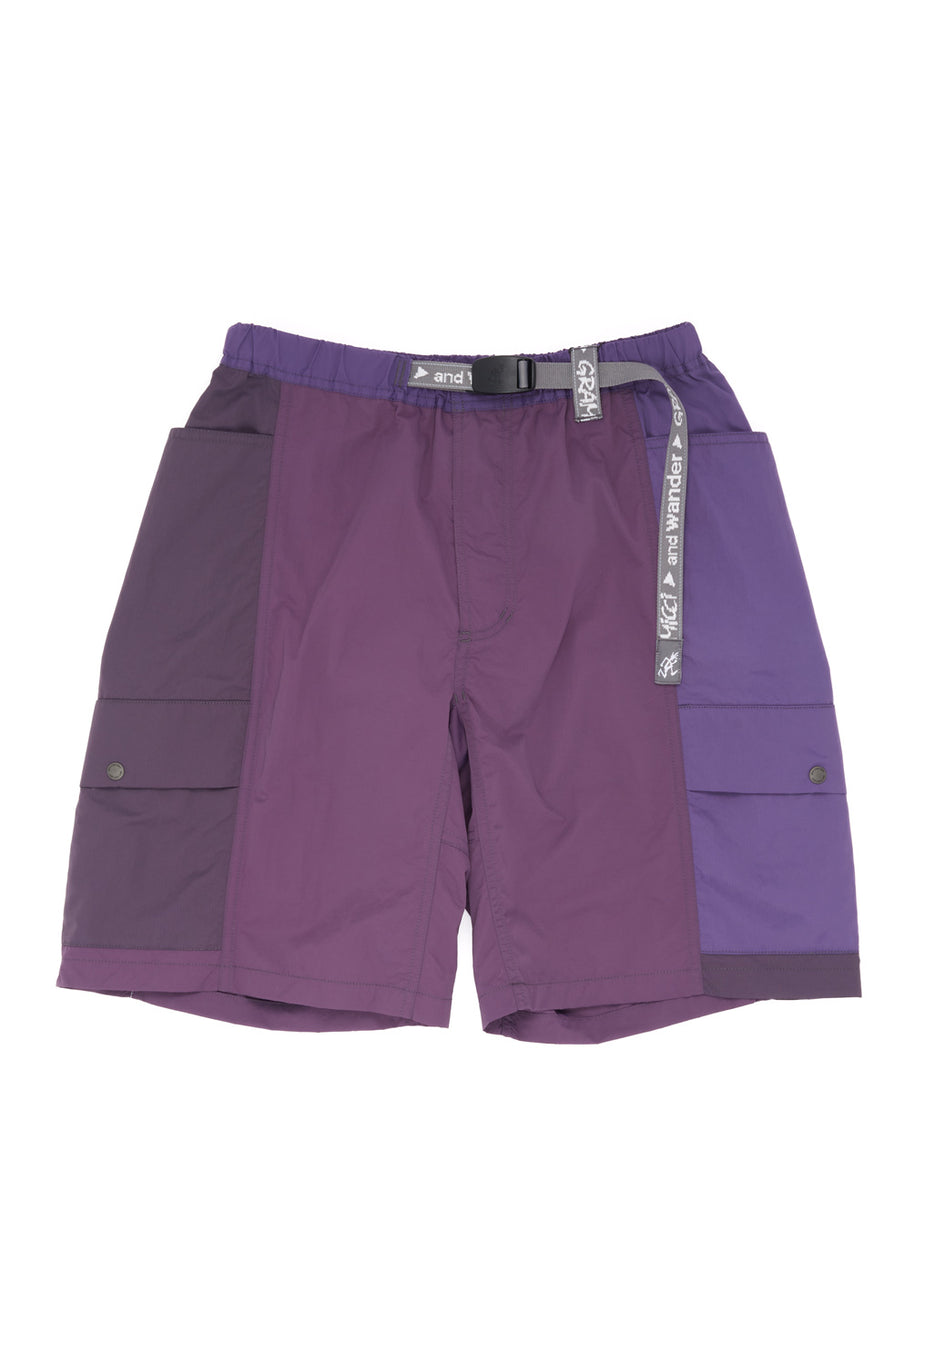 Gramicci x And Wander Patchwork Wind Shorts - Multi Purple